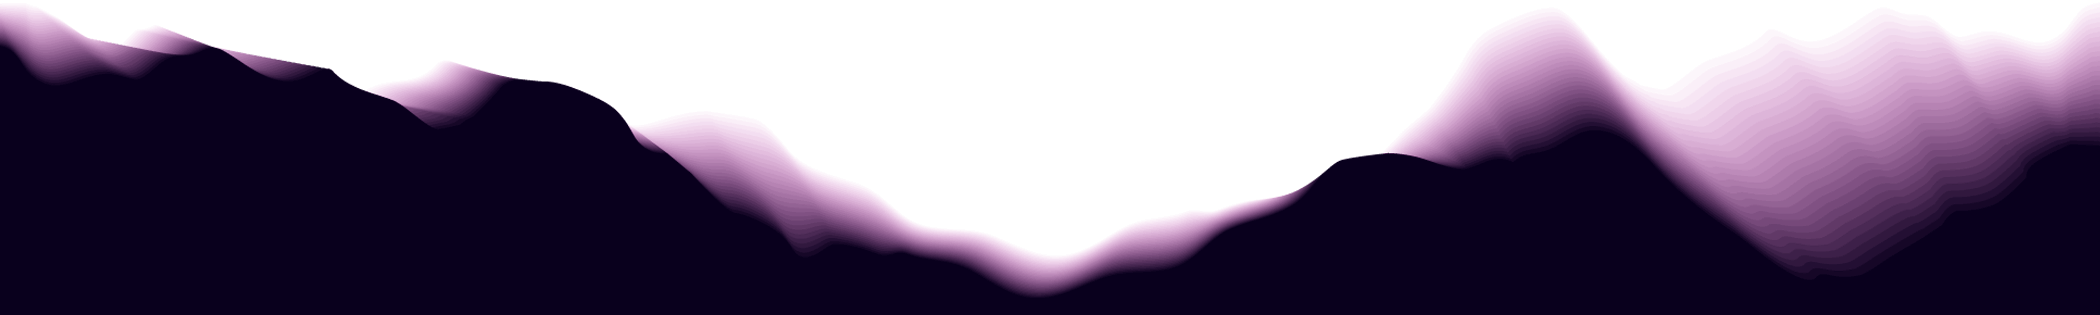 http://www.marabout-diawara.com/wp-content/uploads/2018/05/purple_top_divider.png